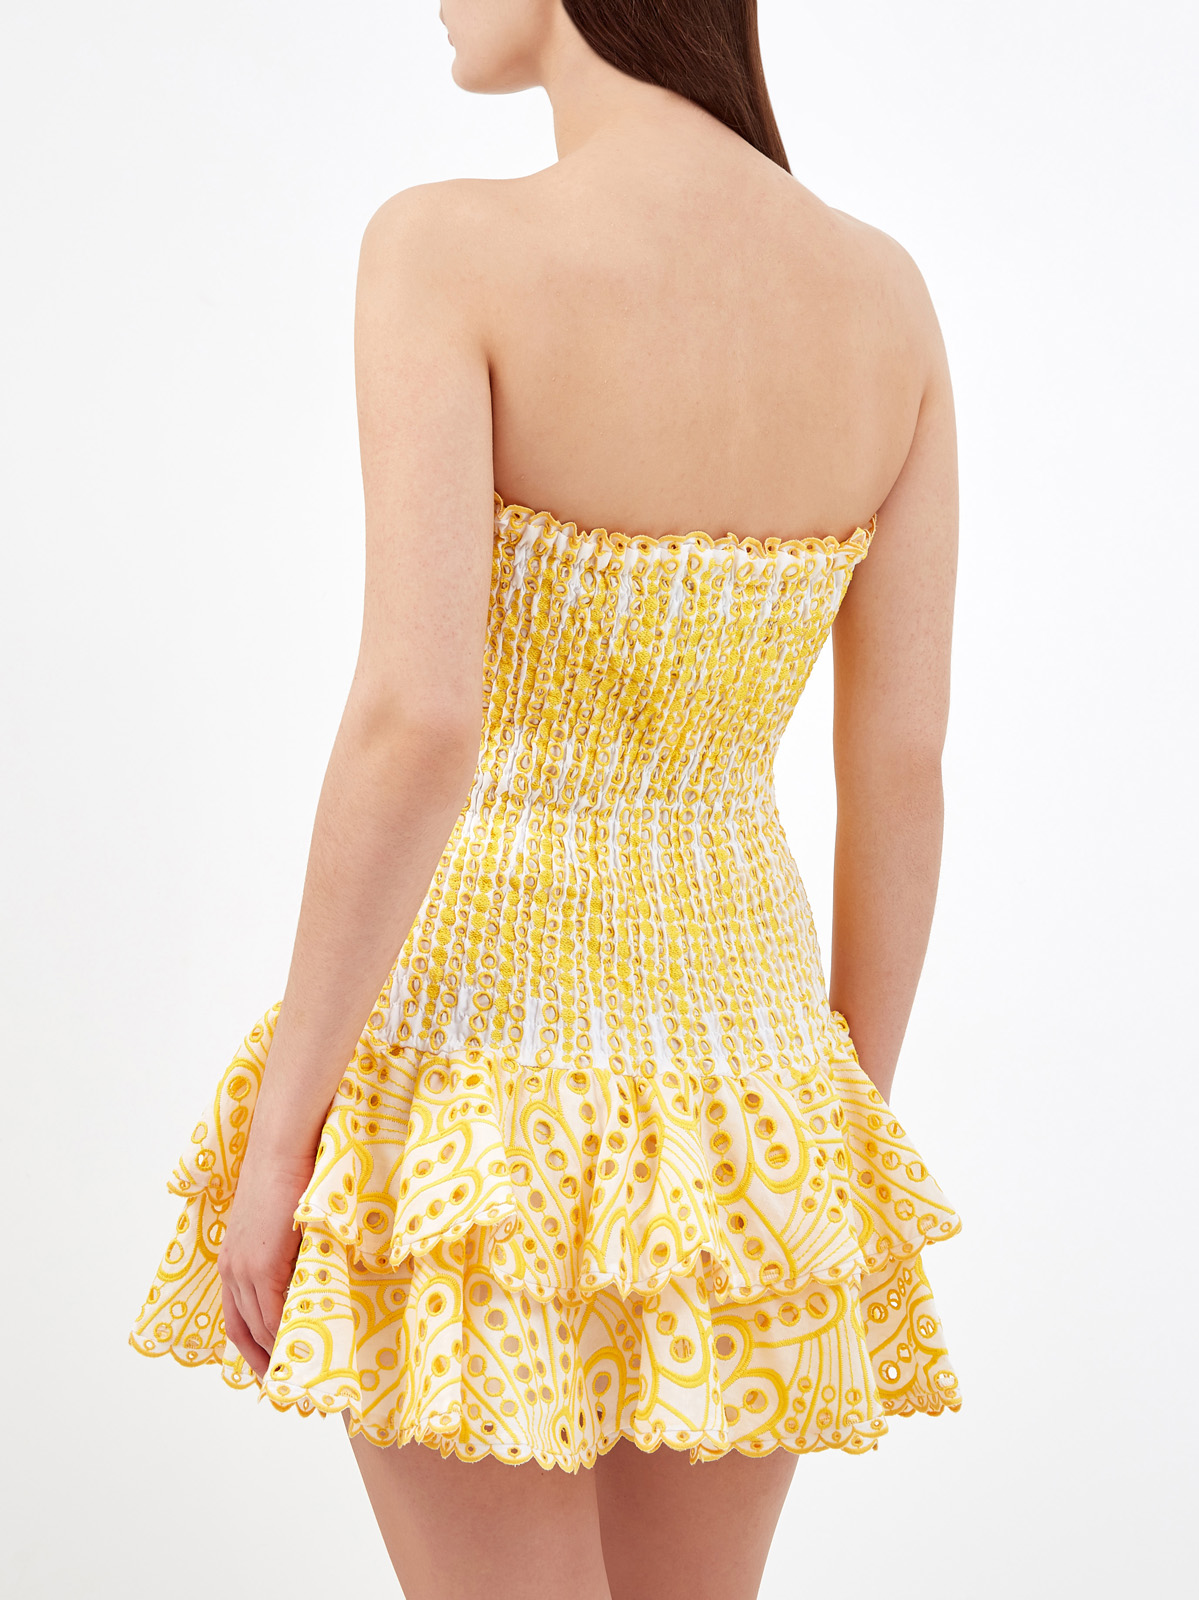 Мини-платье Megan из вышитого хлопка broderie anglaise CHARO RUIZ IBIZA, цвет желтый, размер M;L;S - фото 4